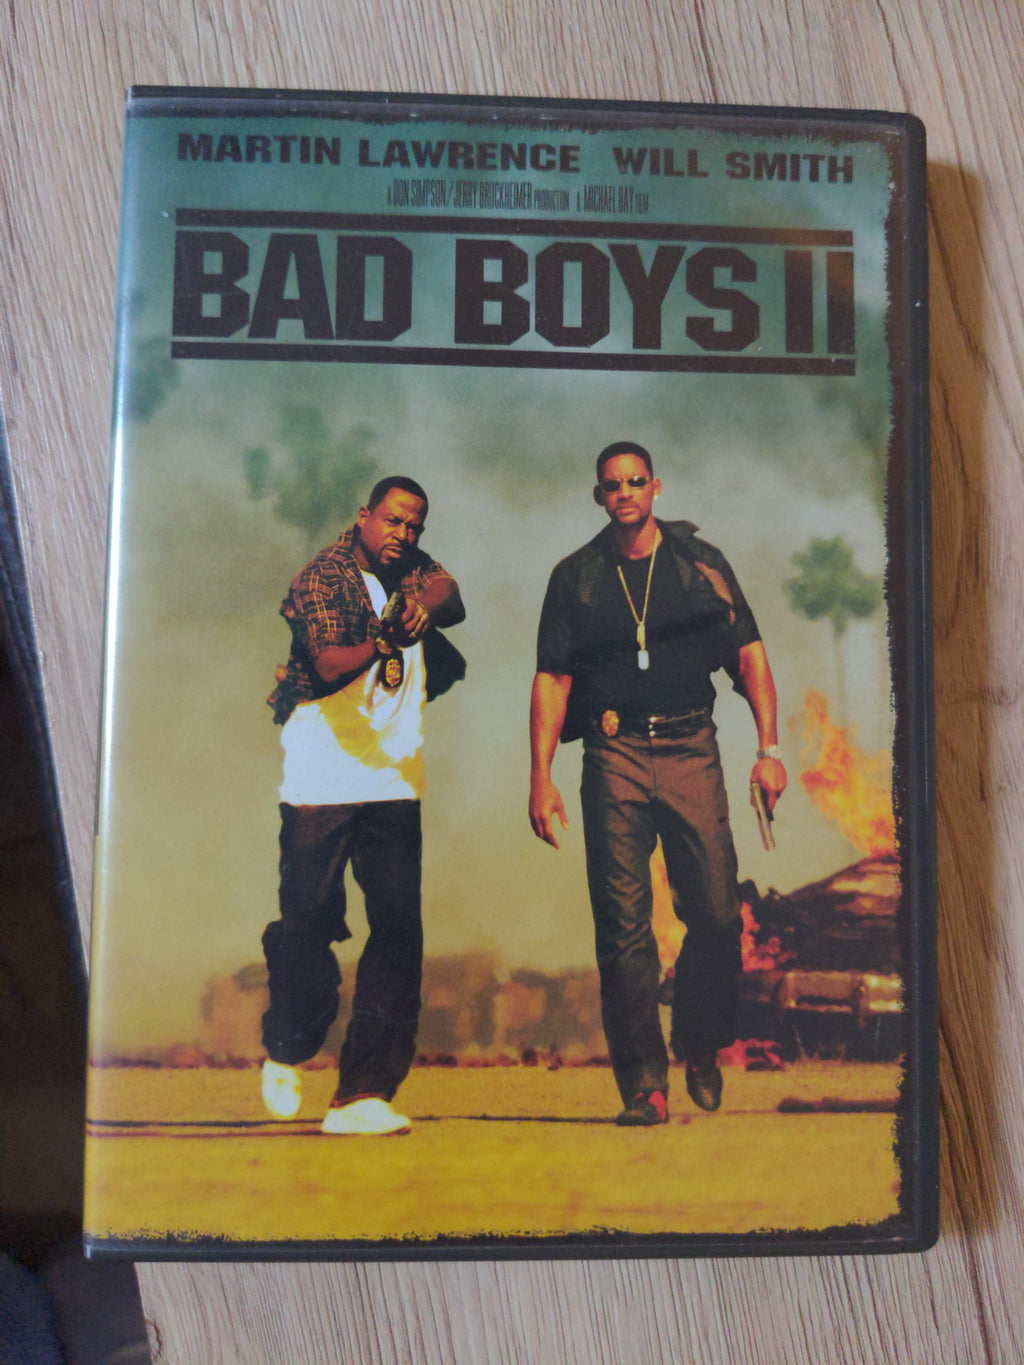 Bad Boys II 2 Disc DVD Set - Will Smith - Martin Lawrence